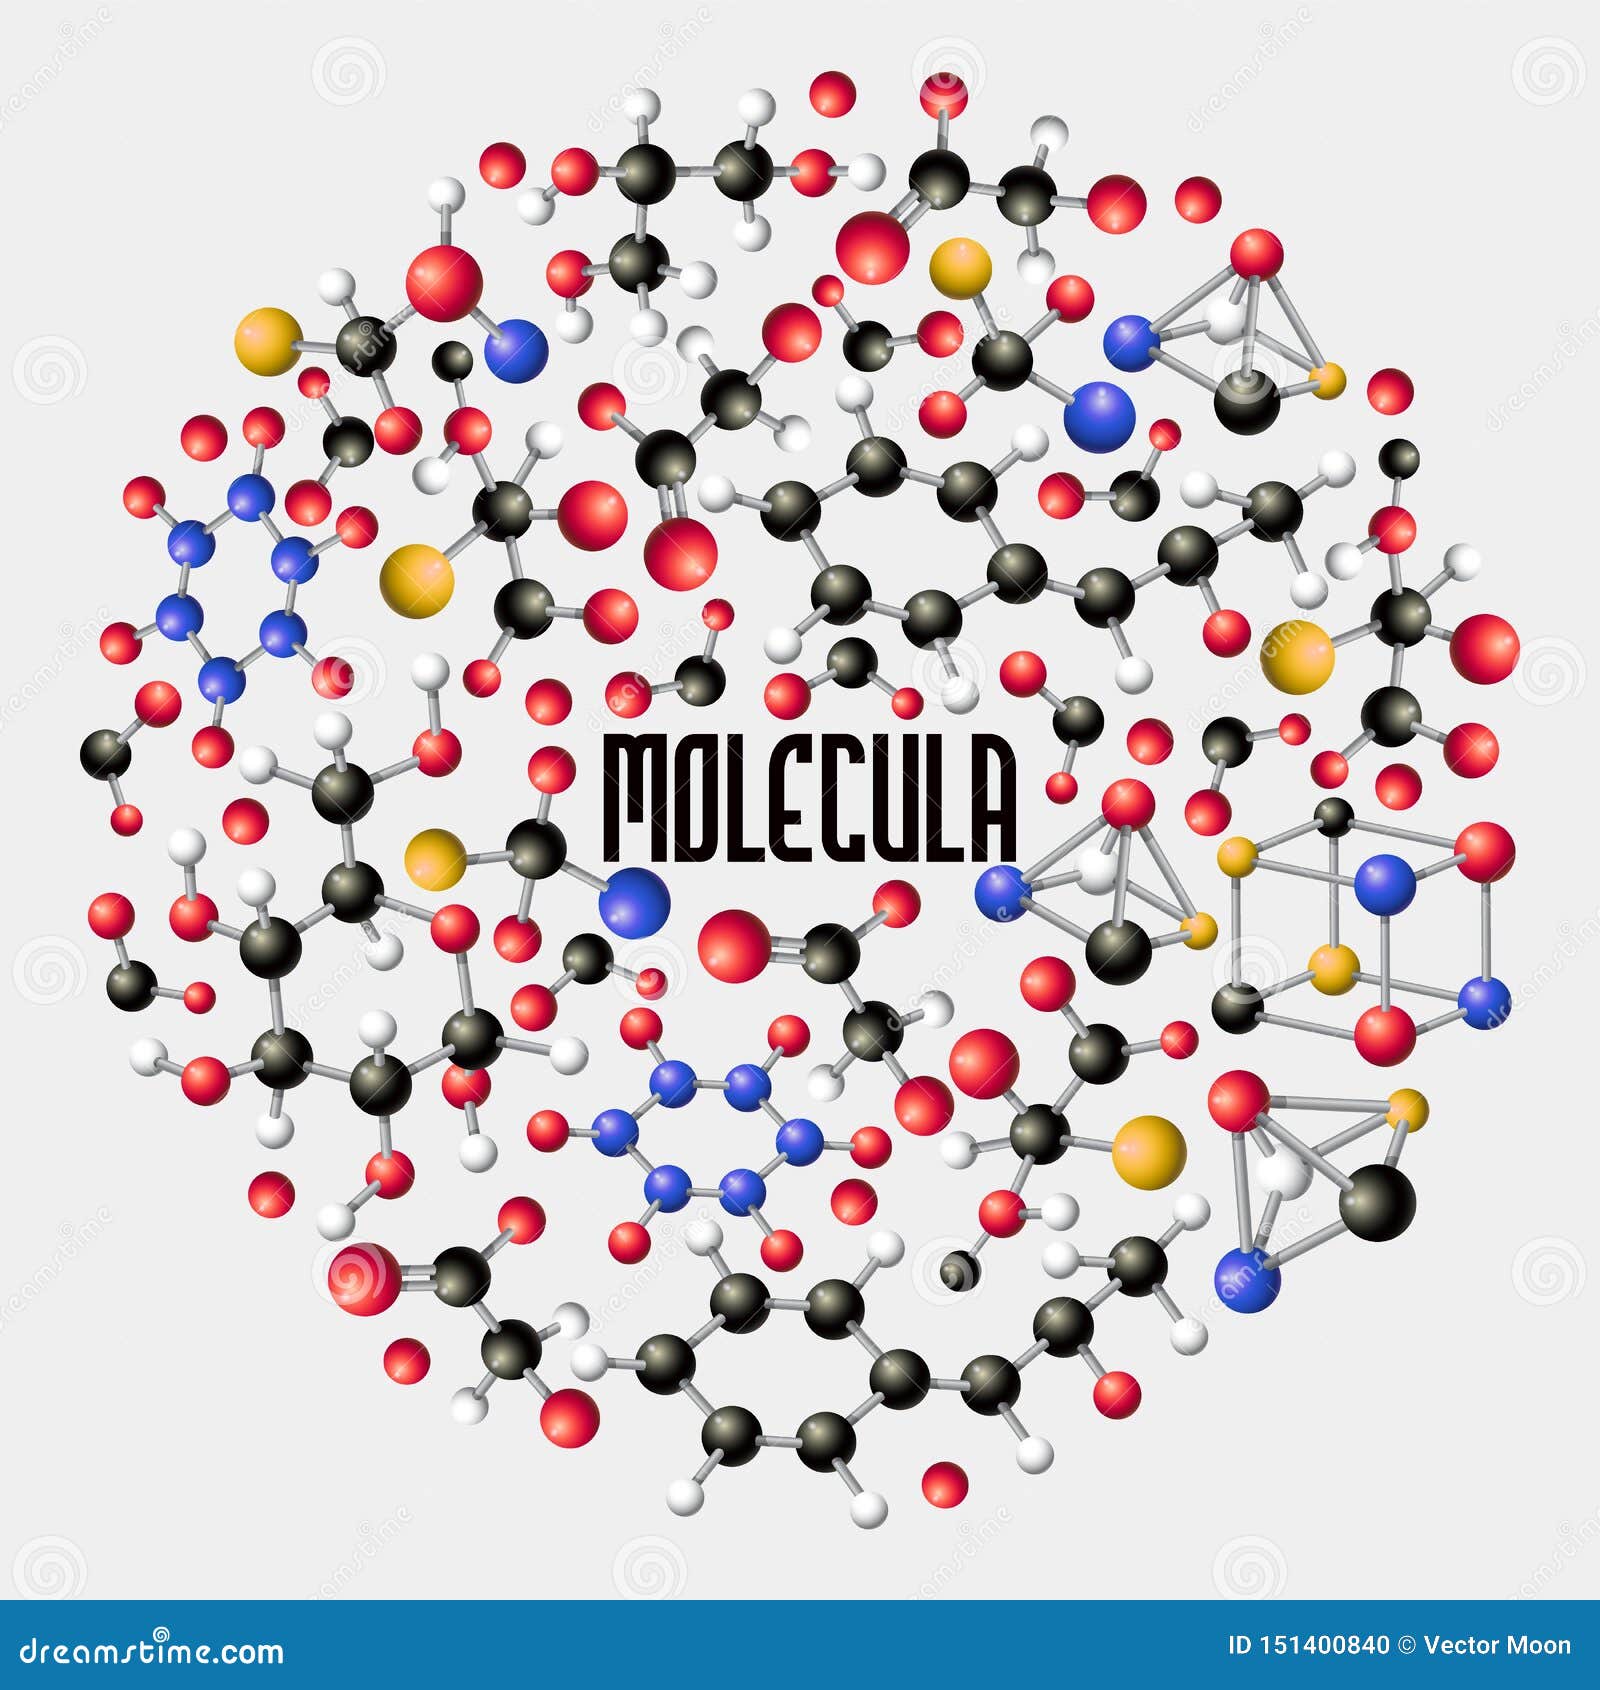 biology, medicine scientific, molecular research dna concept banner. custom s and colours cells and moleculas